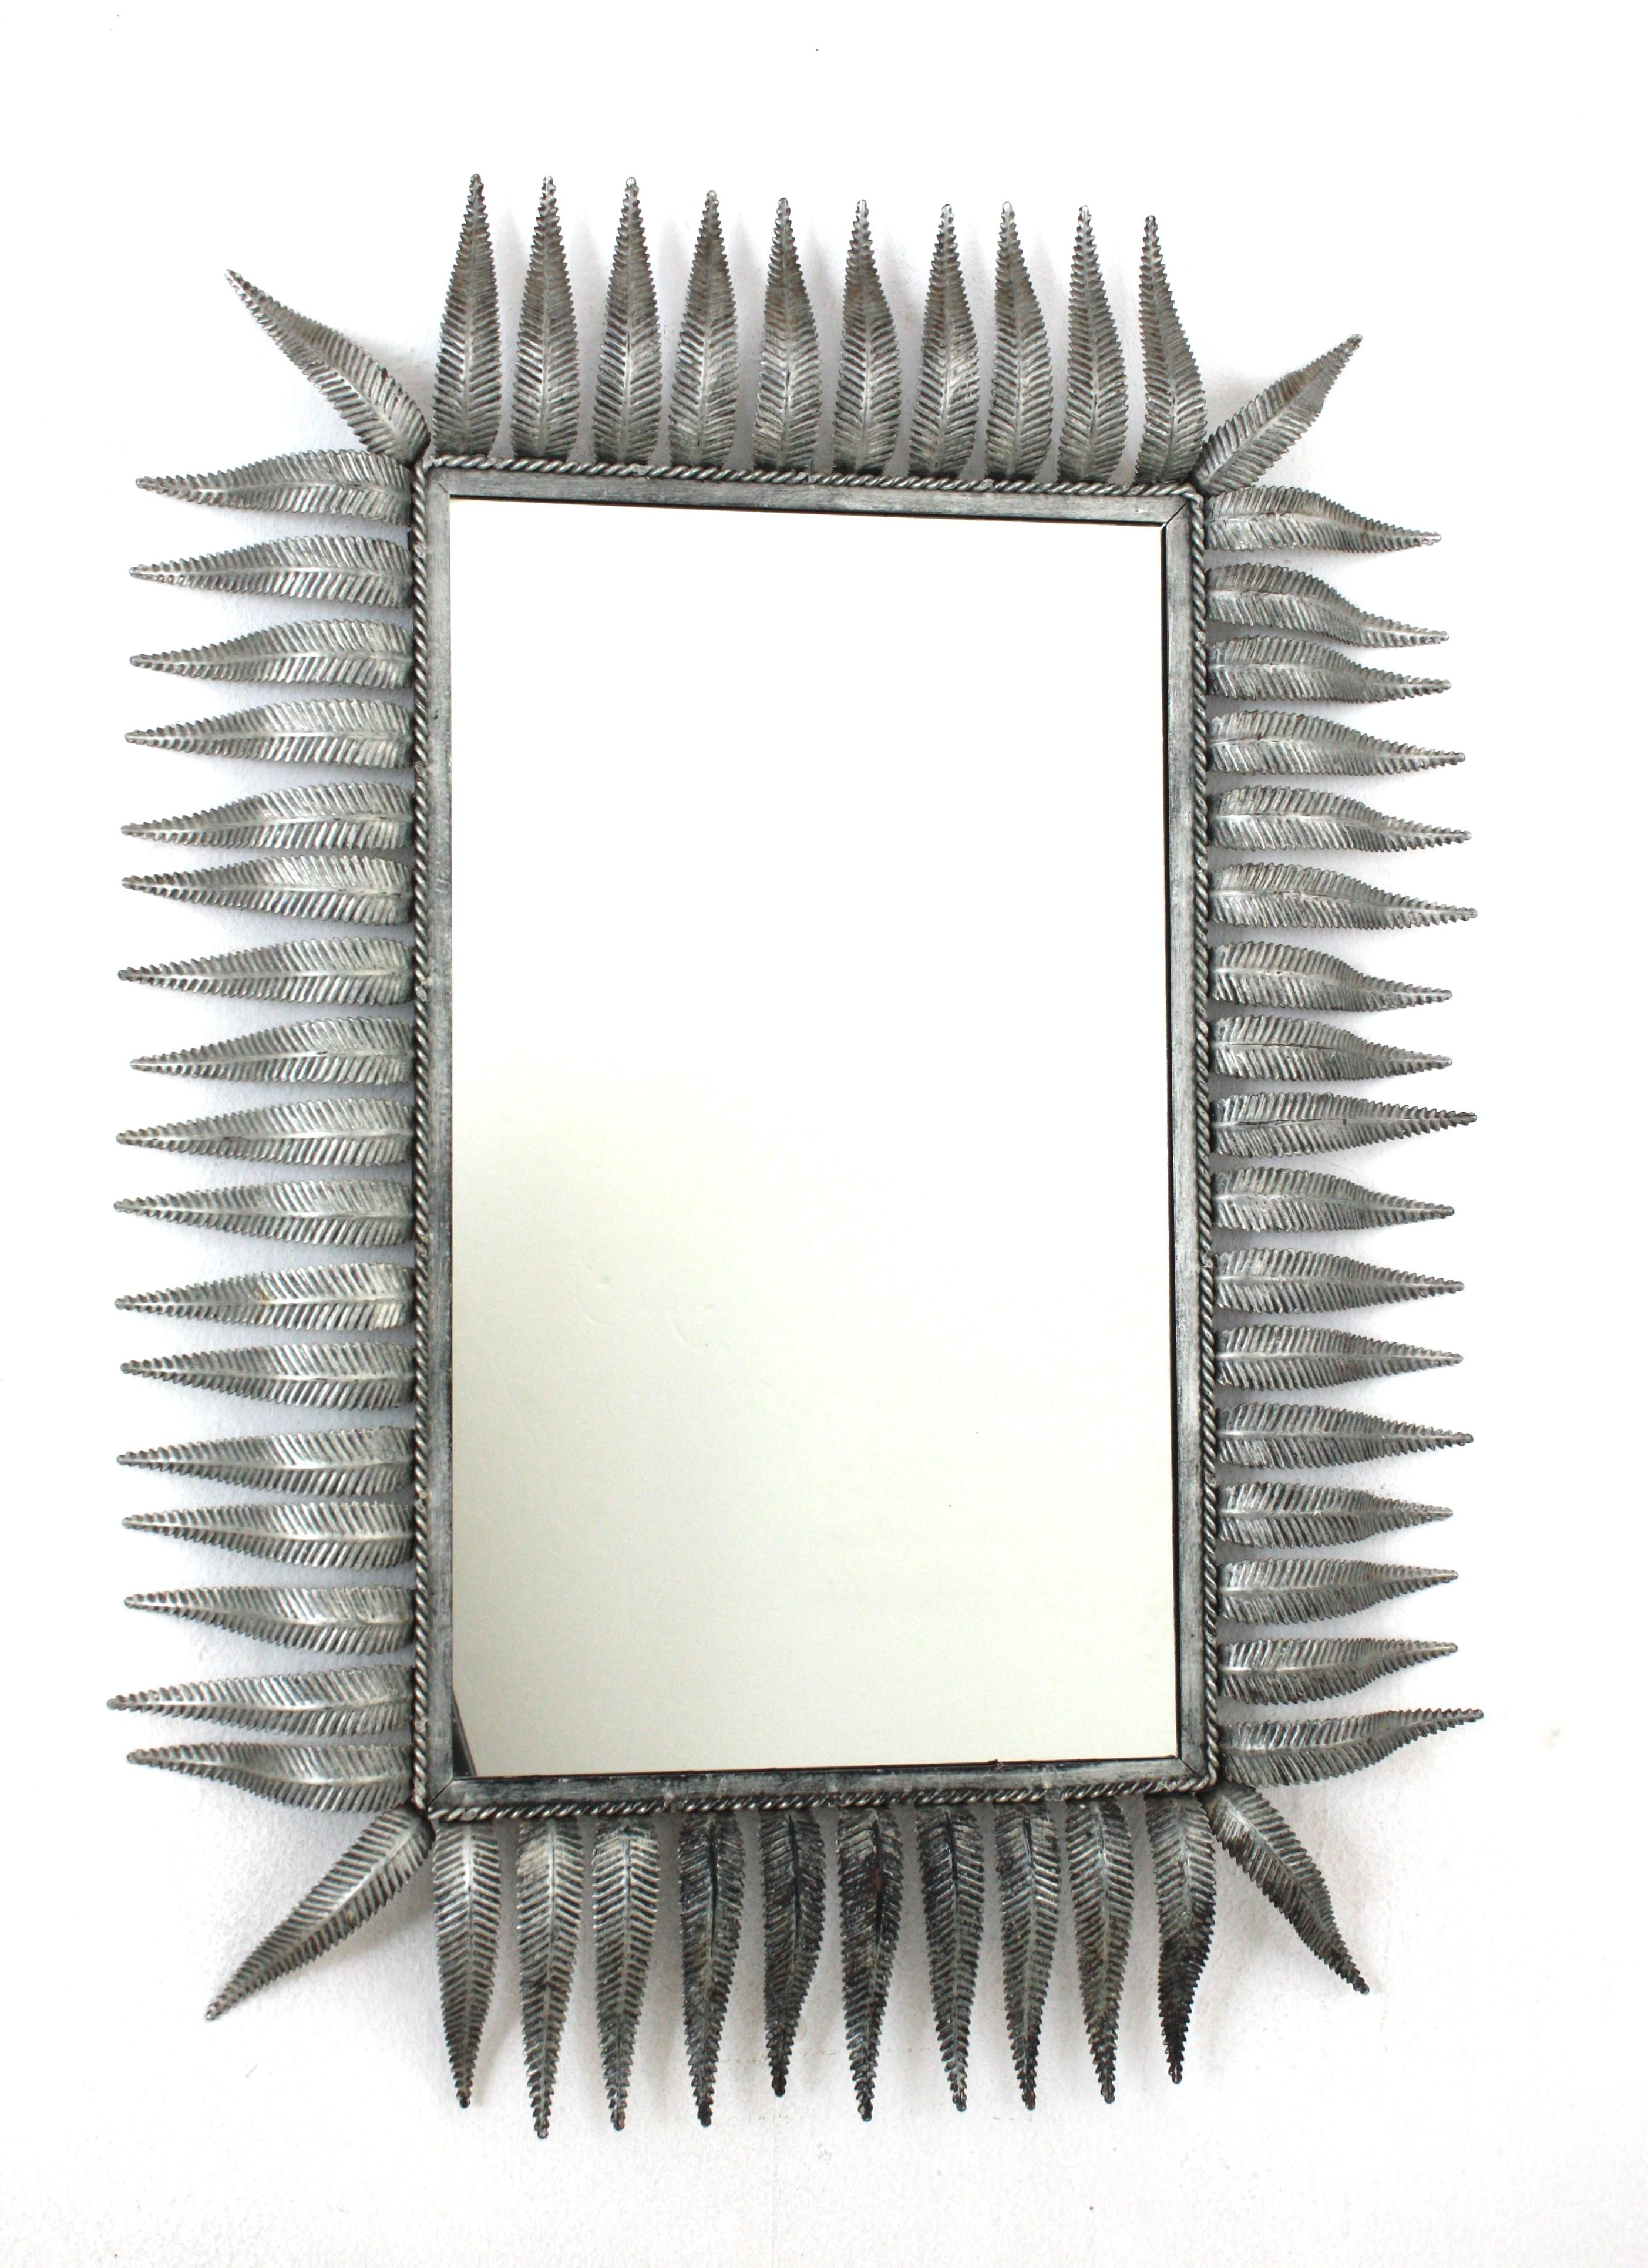 Spanish Sunburst Rectangular Mirror, Silver Gilt Metal, 1950s For Sale 1